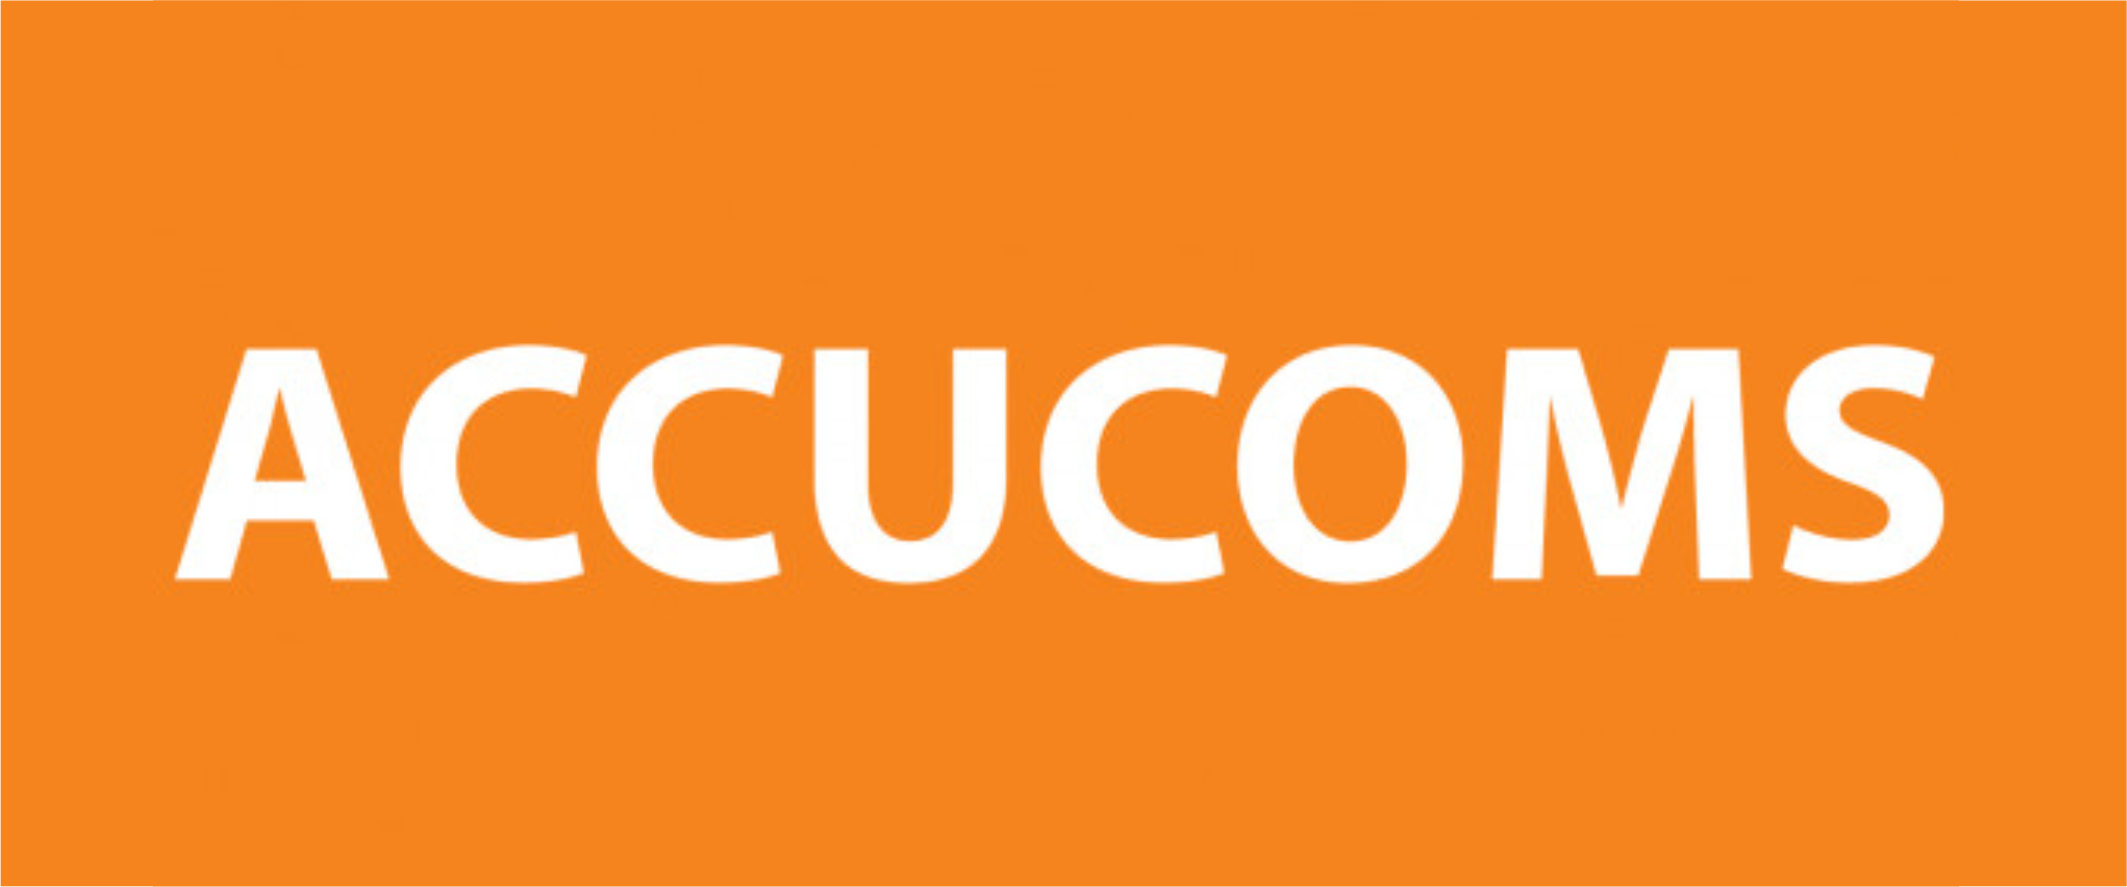 Accucoms Logo